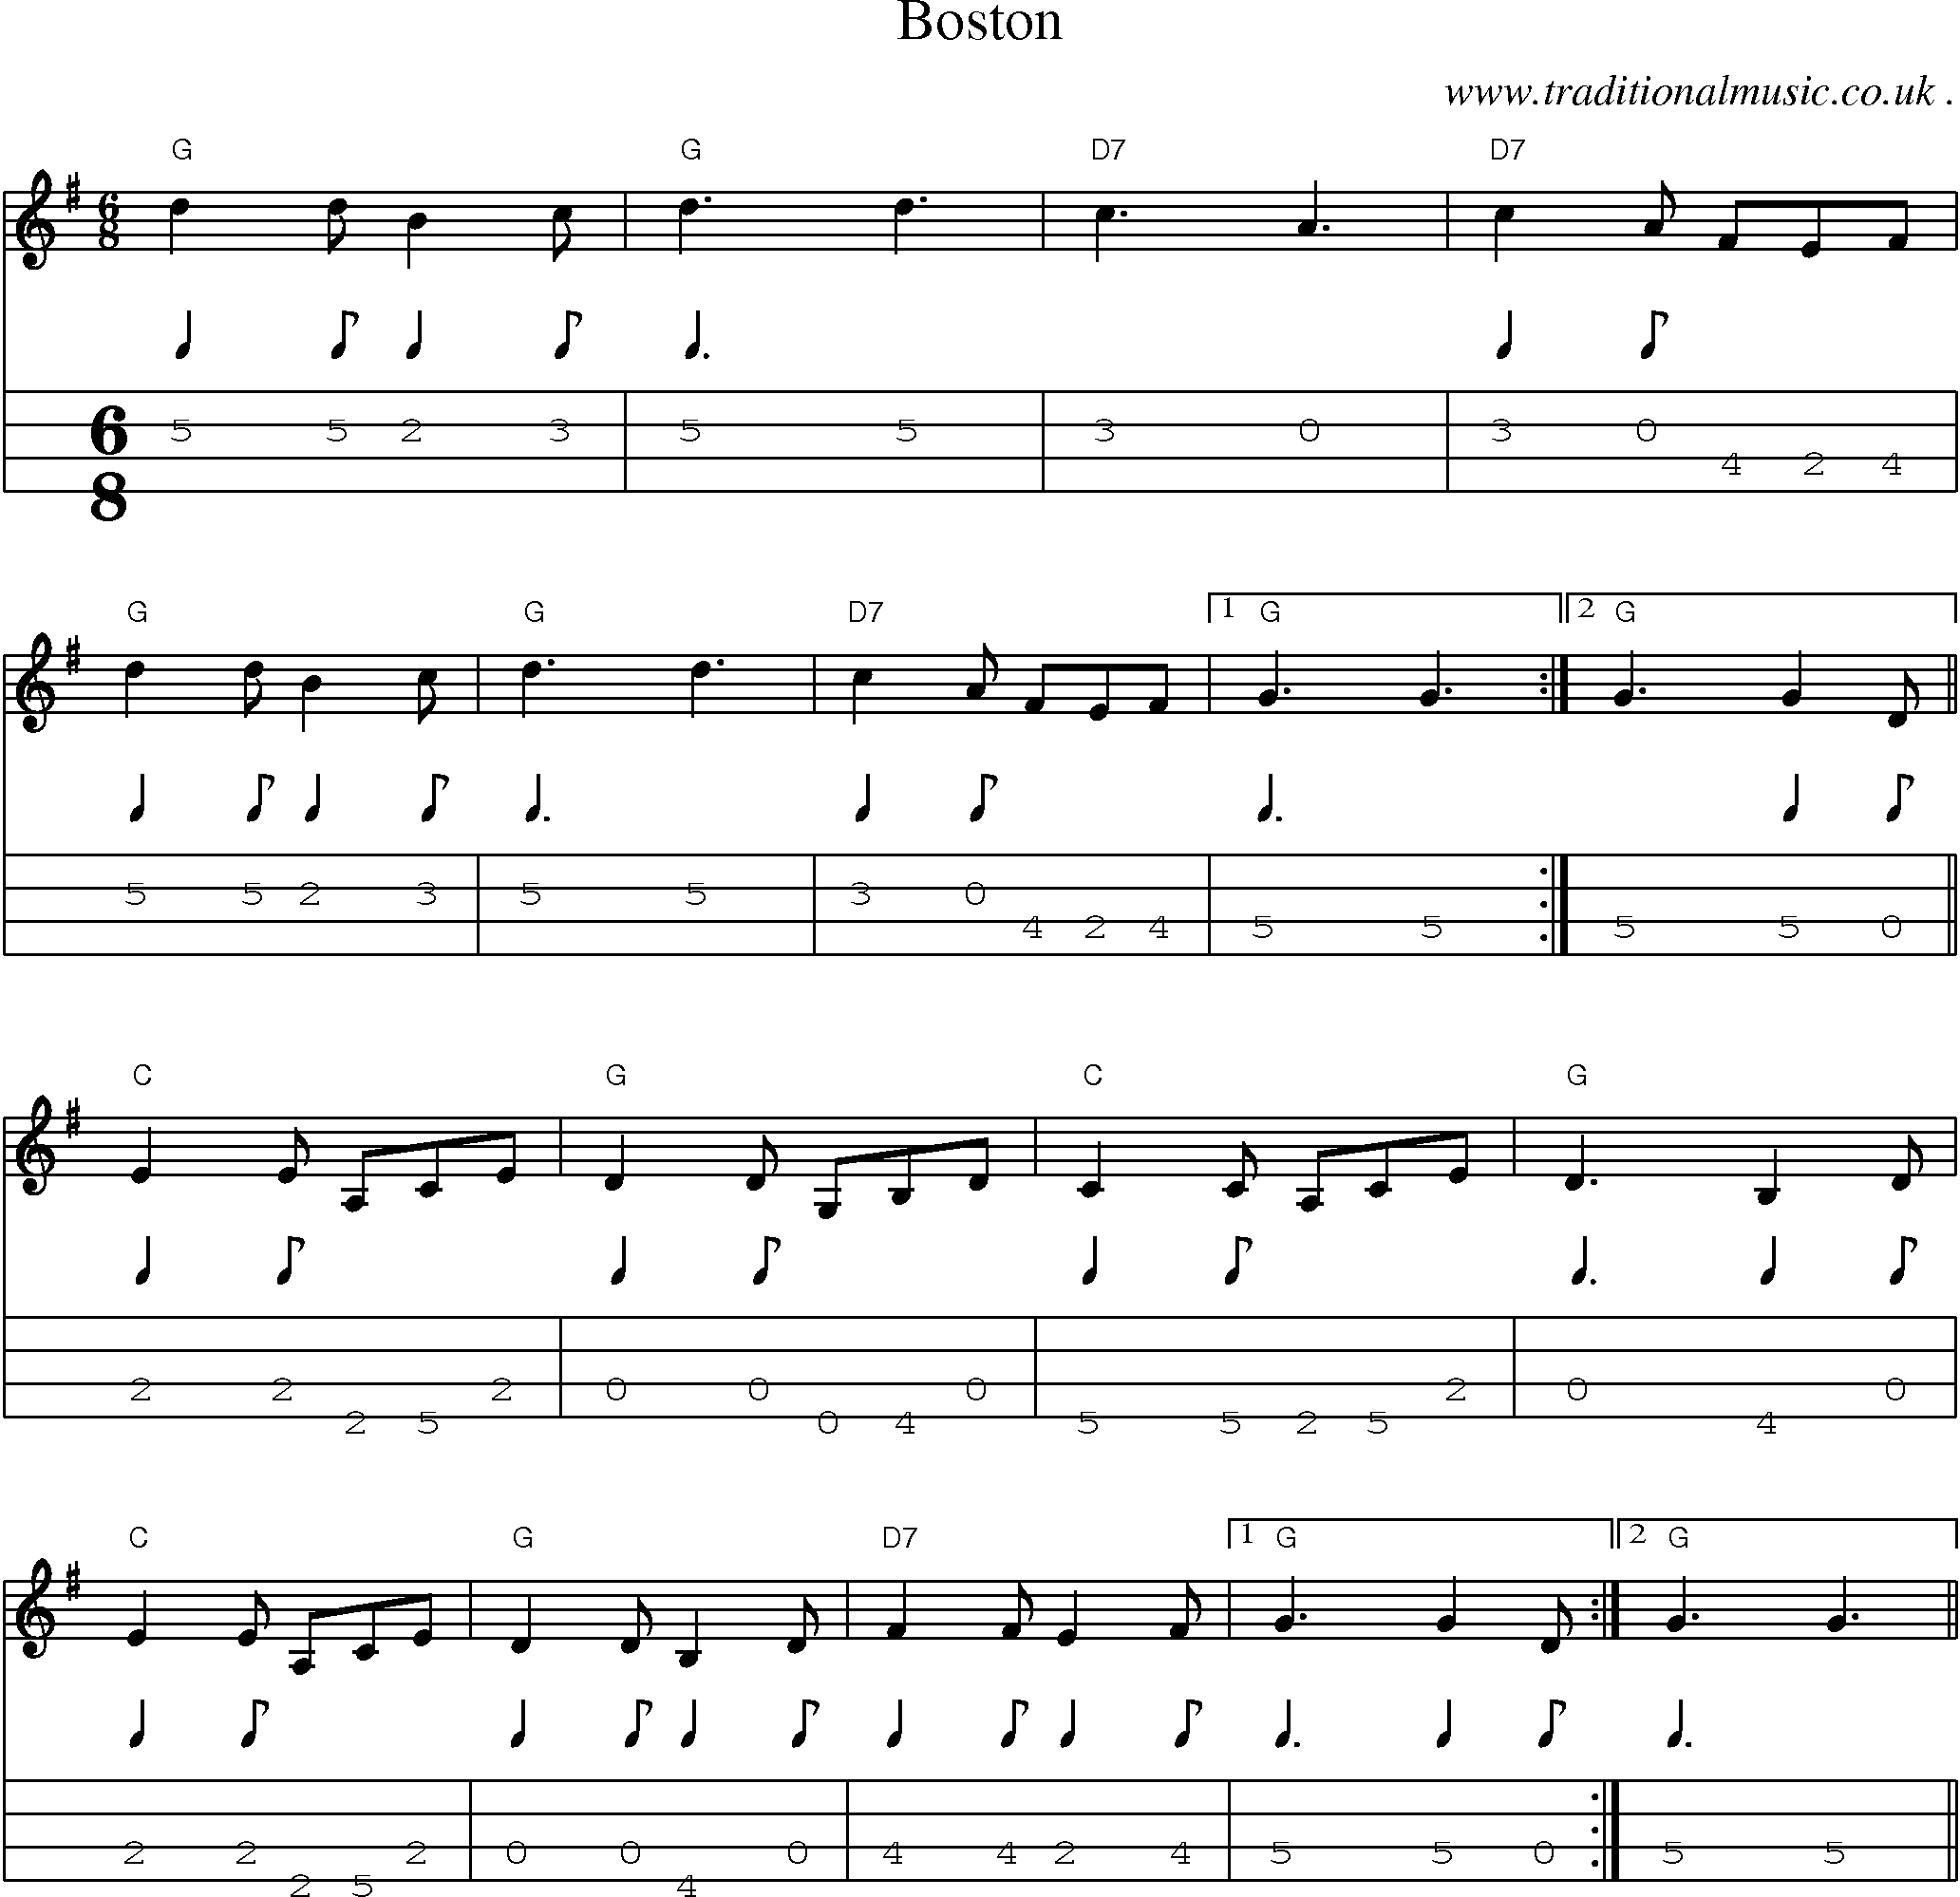 Music Score and Mandolin Tabs for Boston